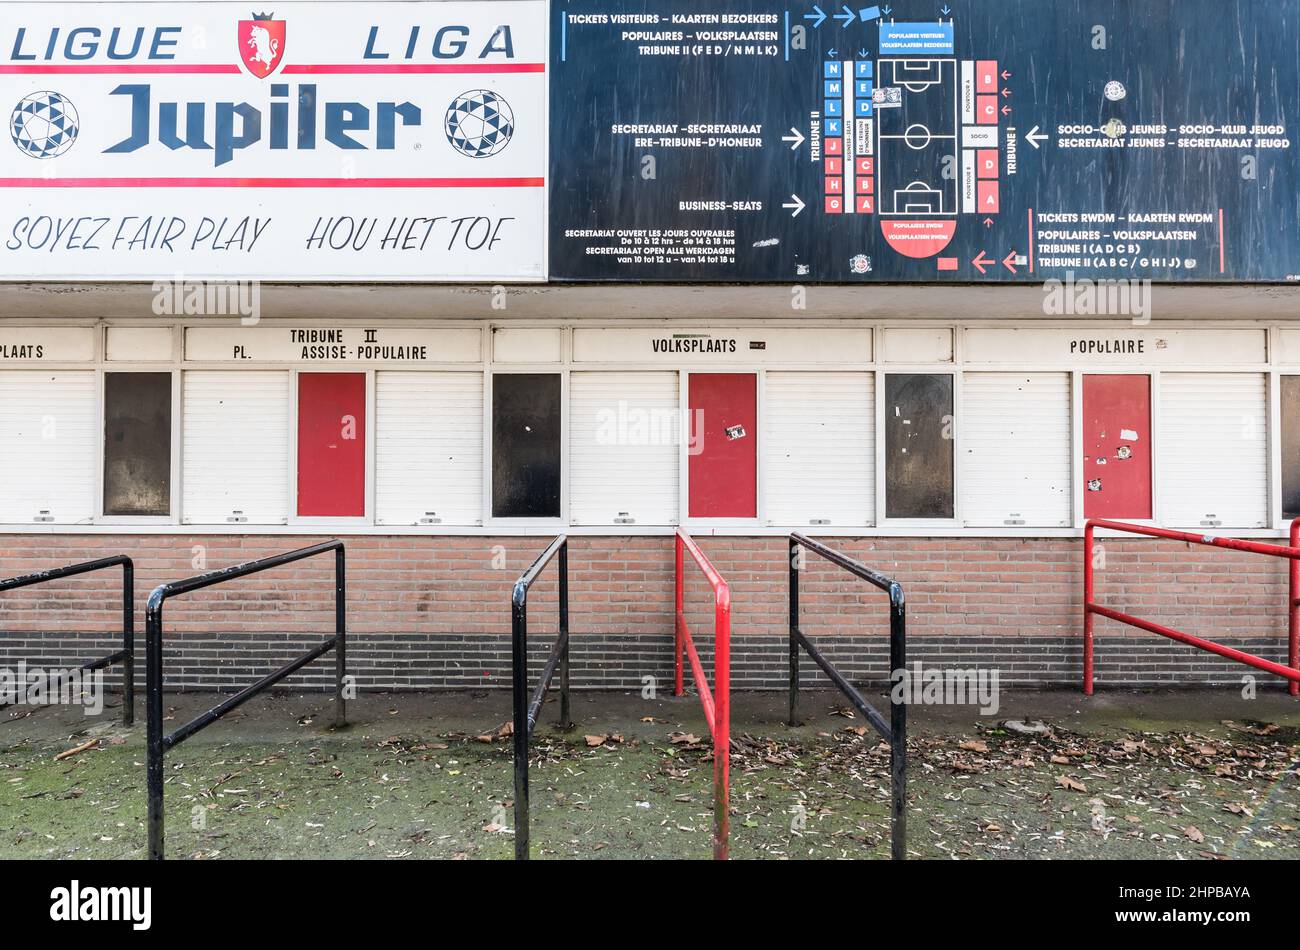 Molenbeek, Brussels / Belgium - 02 16 2019: Ticket box offices of the Racing White Daring Molenbeek football stadium. Stock Photo